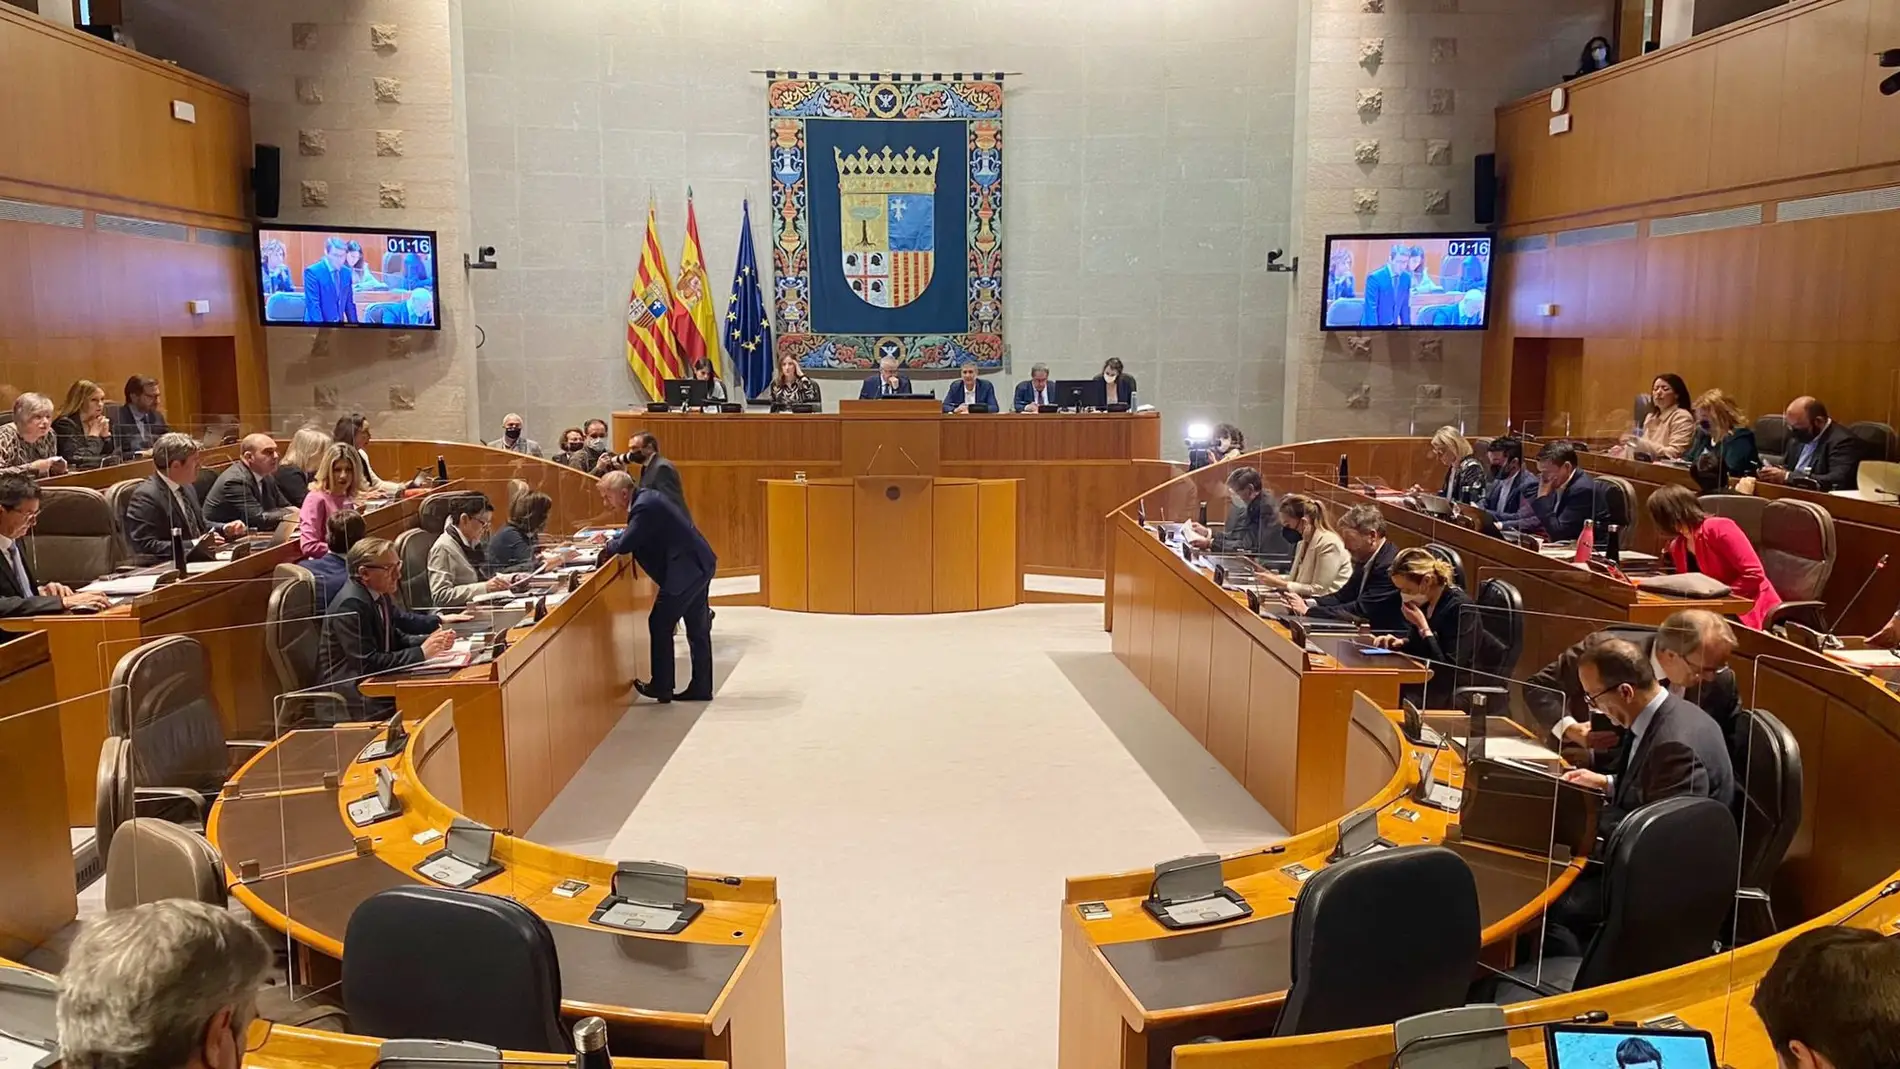 Imagen del salón de plenos del parlamento aragonés